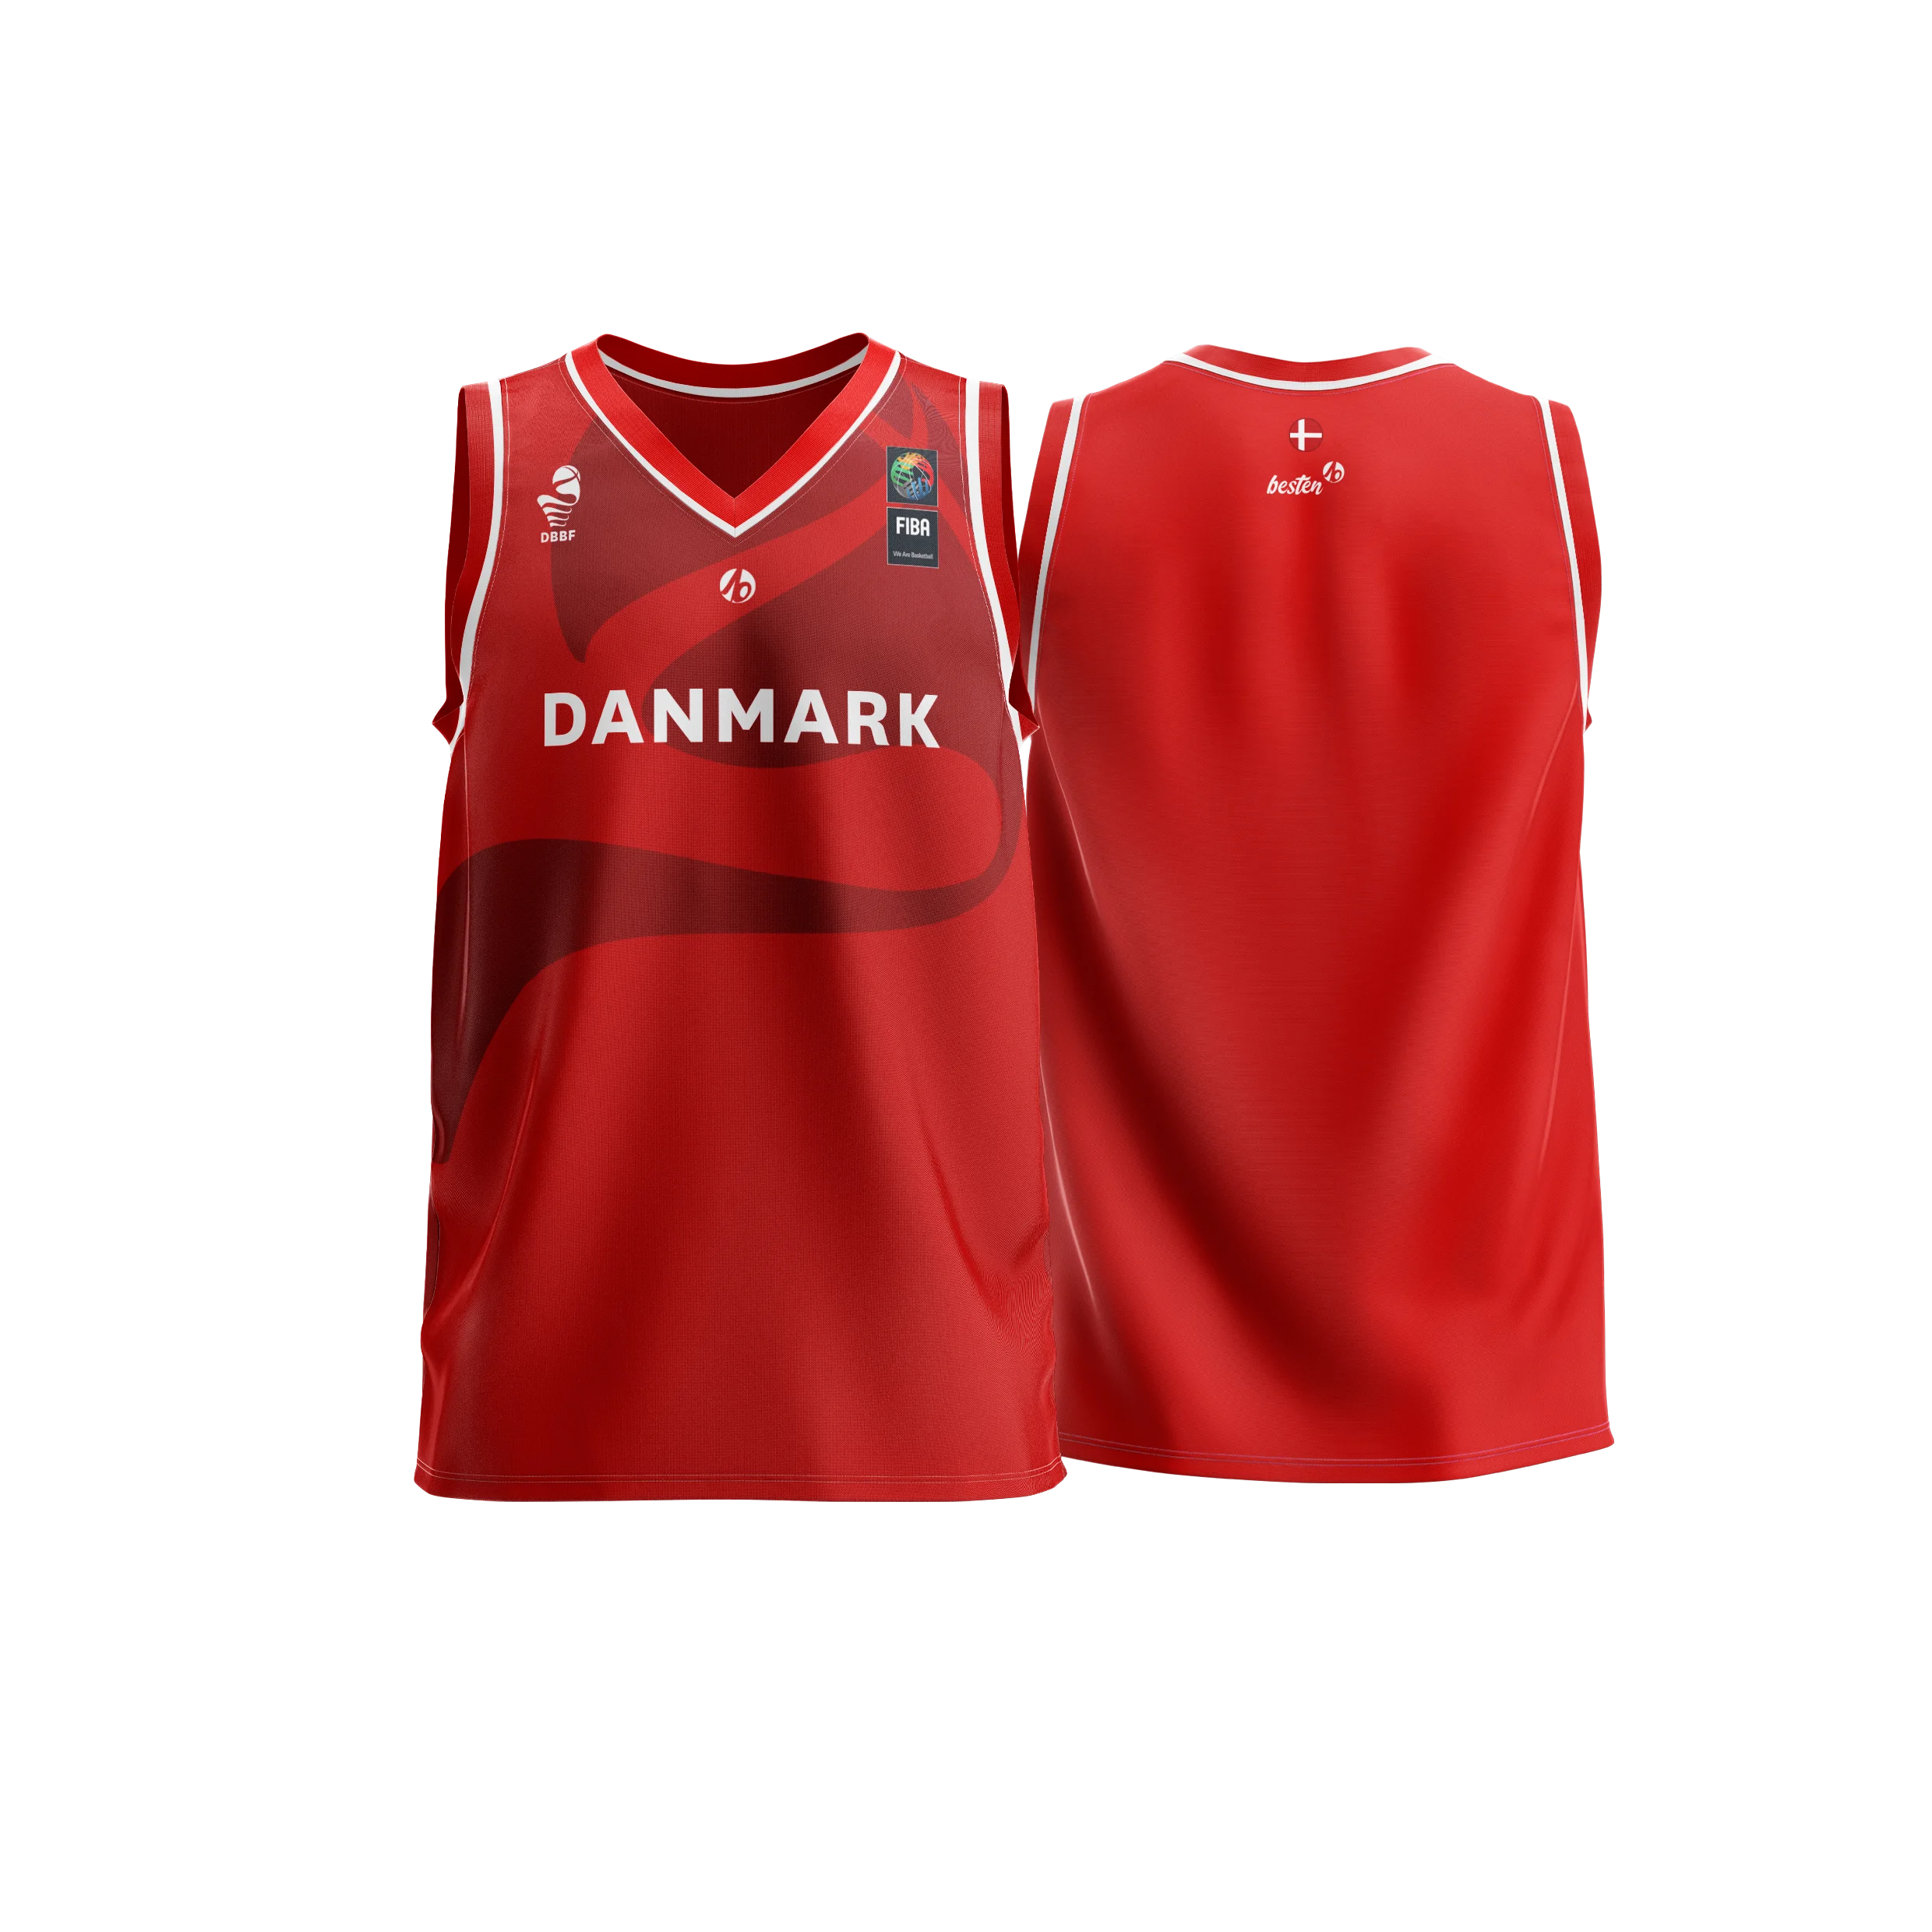 Dinamarca Merchandising camiseta baloncesto